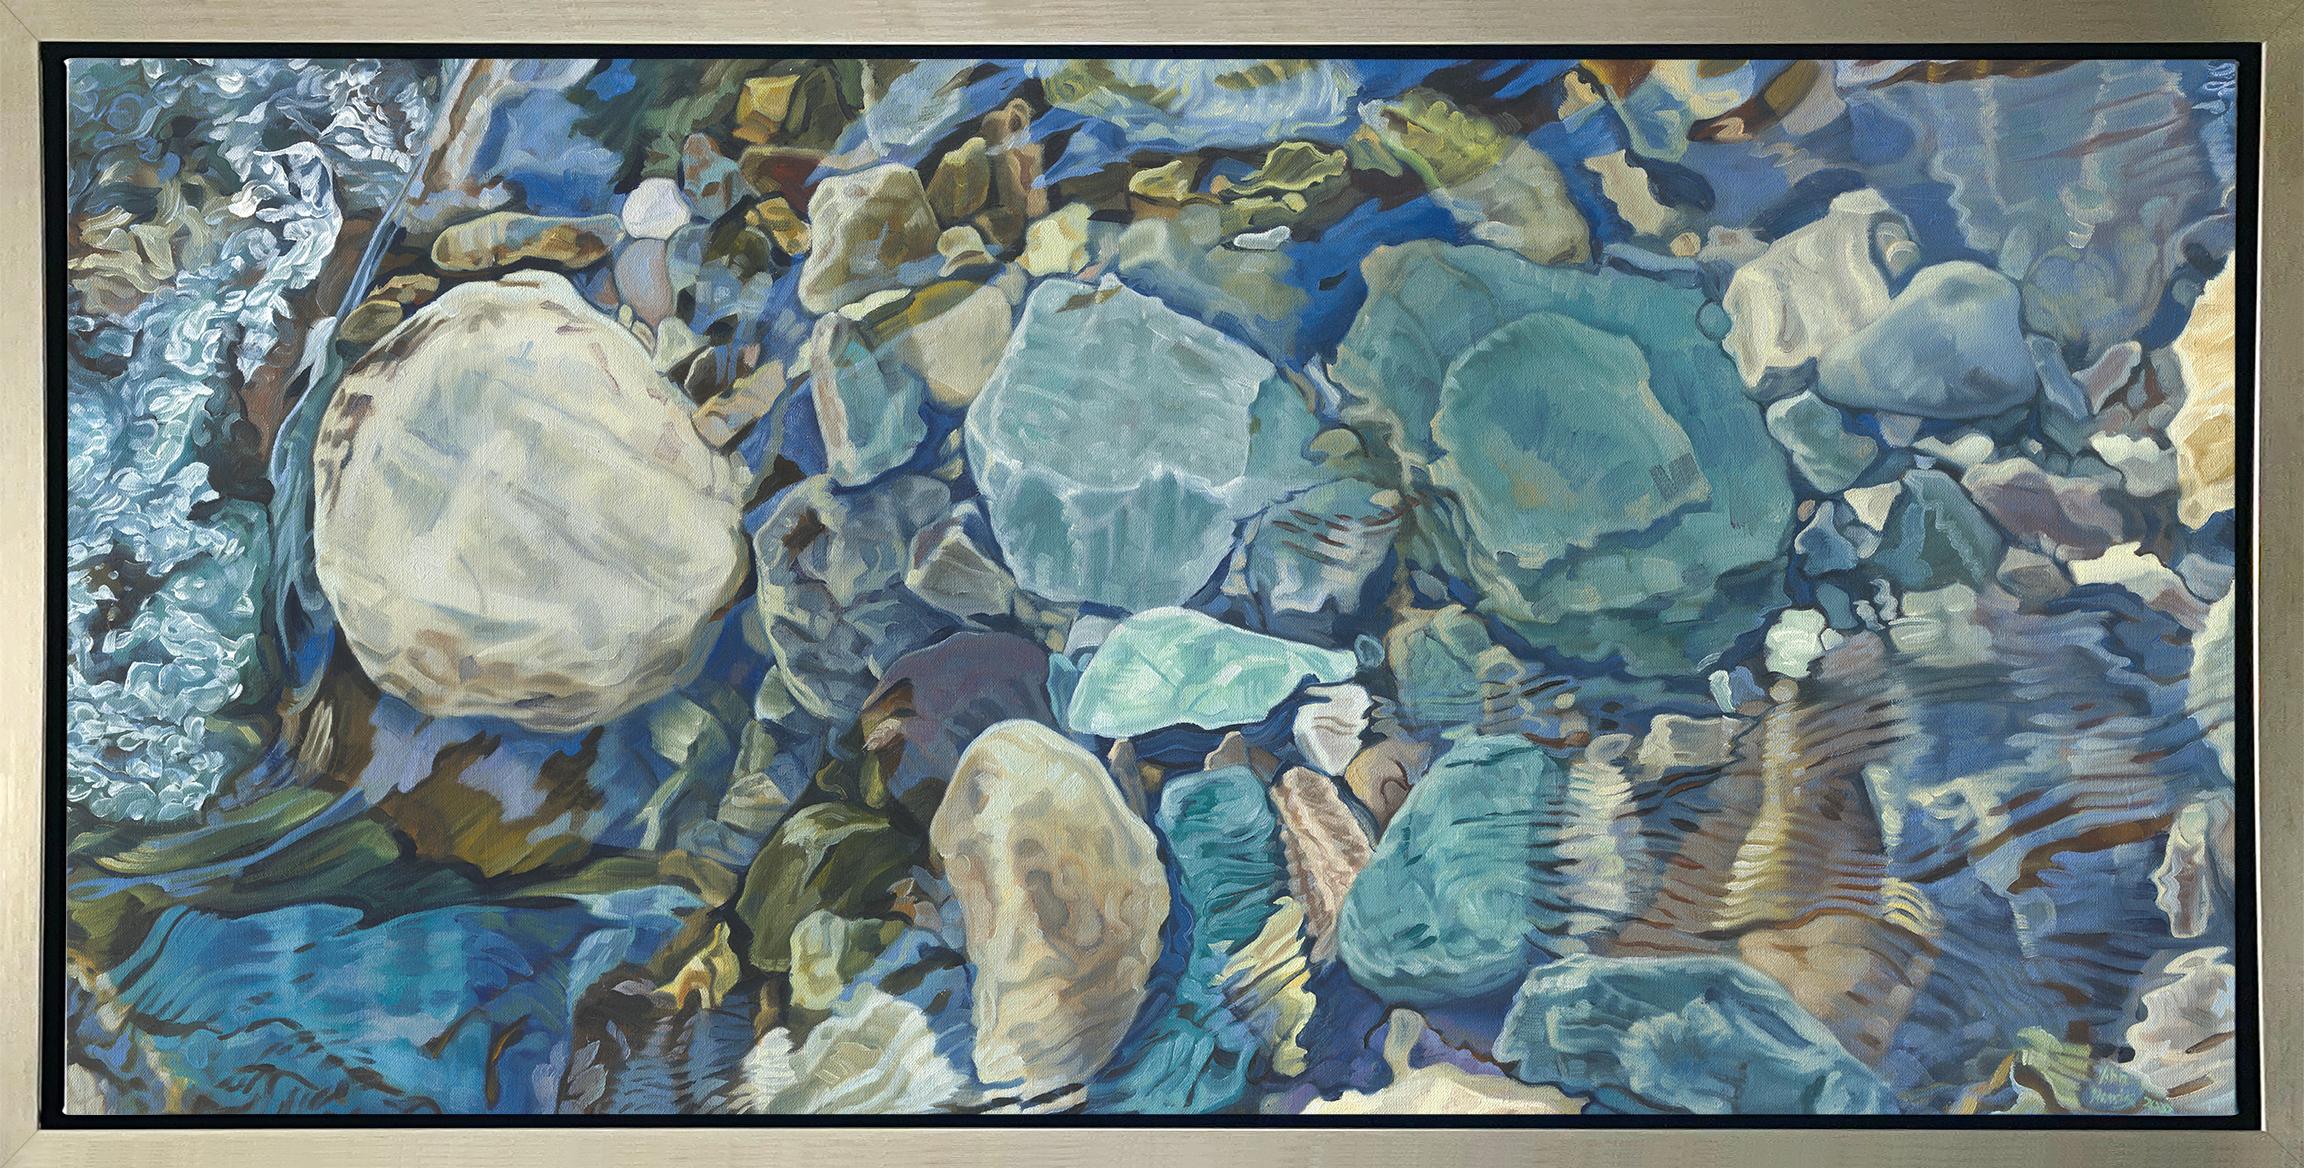 John Harris (painter) Landscape Print - "Rocky River 8, " Framed Limited Edition Giclee Print, 36" x 72"